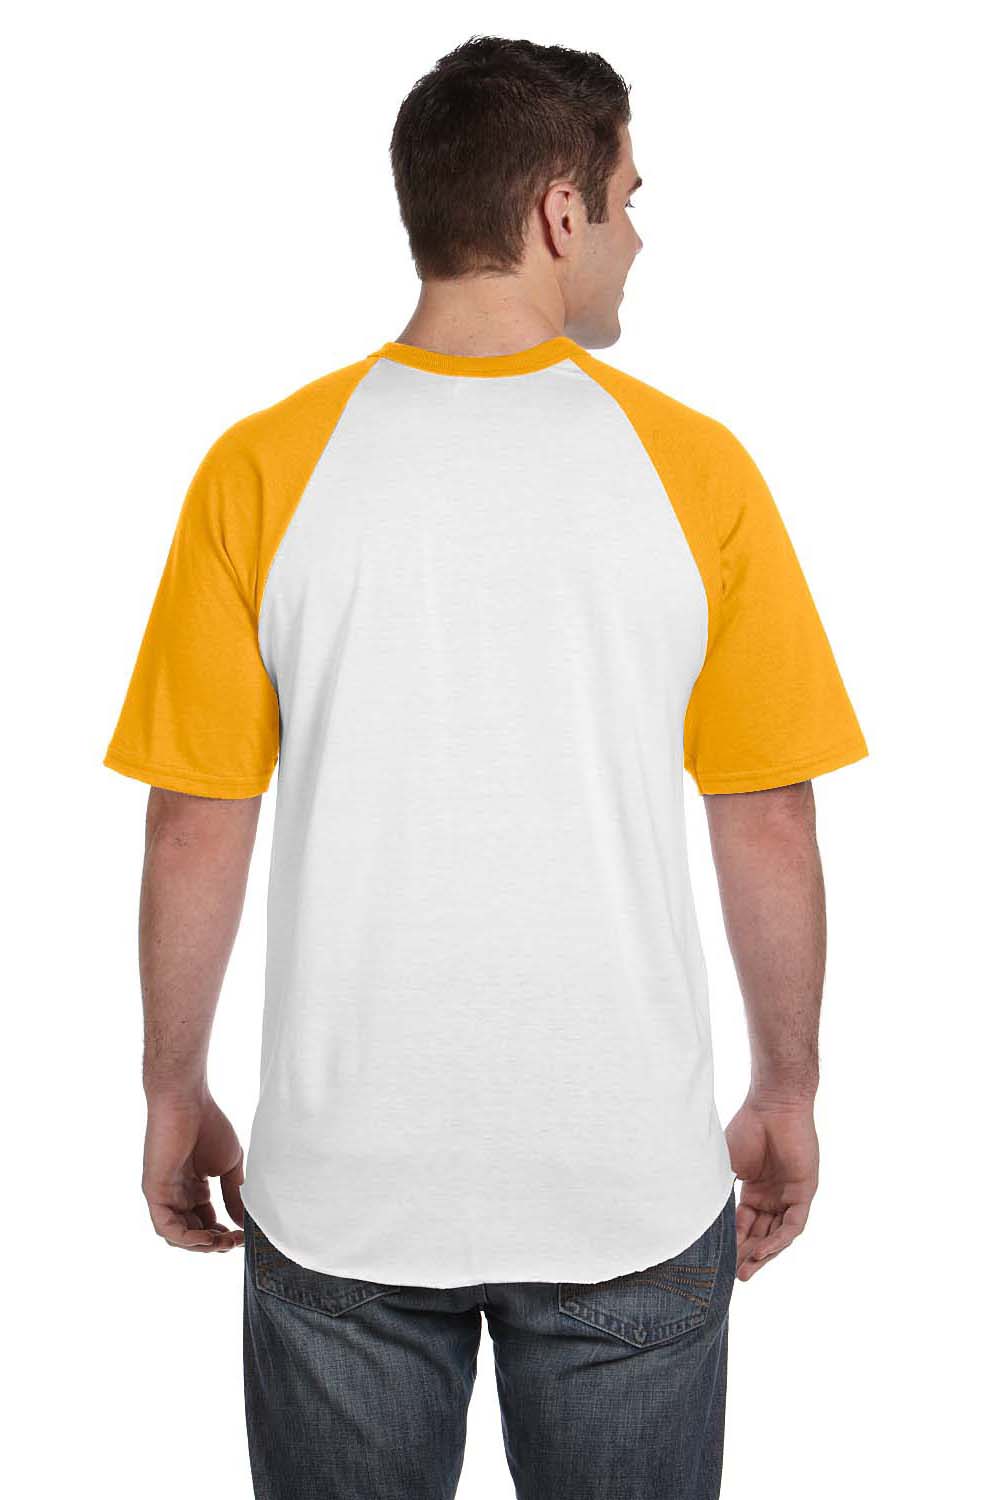 Augusta Sportswear 423 Mens Short Sleeve Crewneck T-Shirt White/Gold Model Back